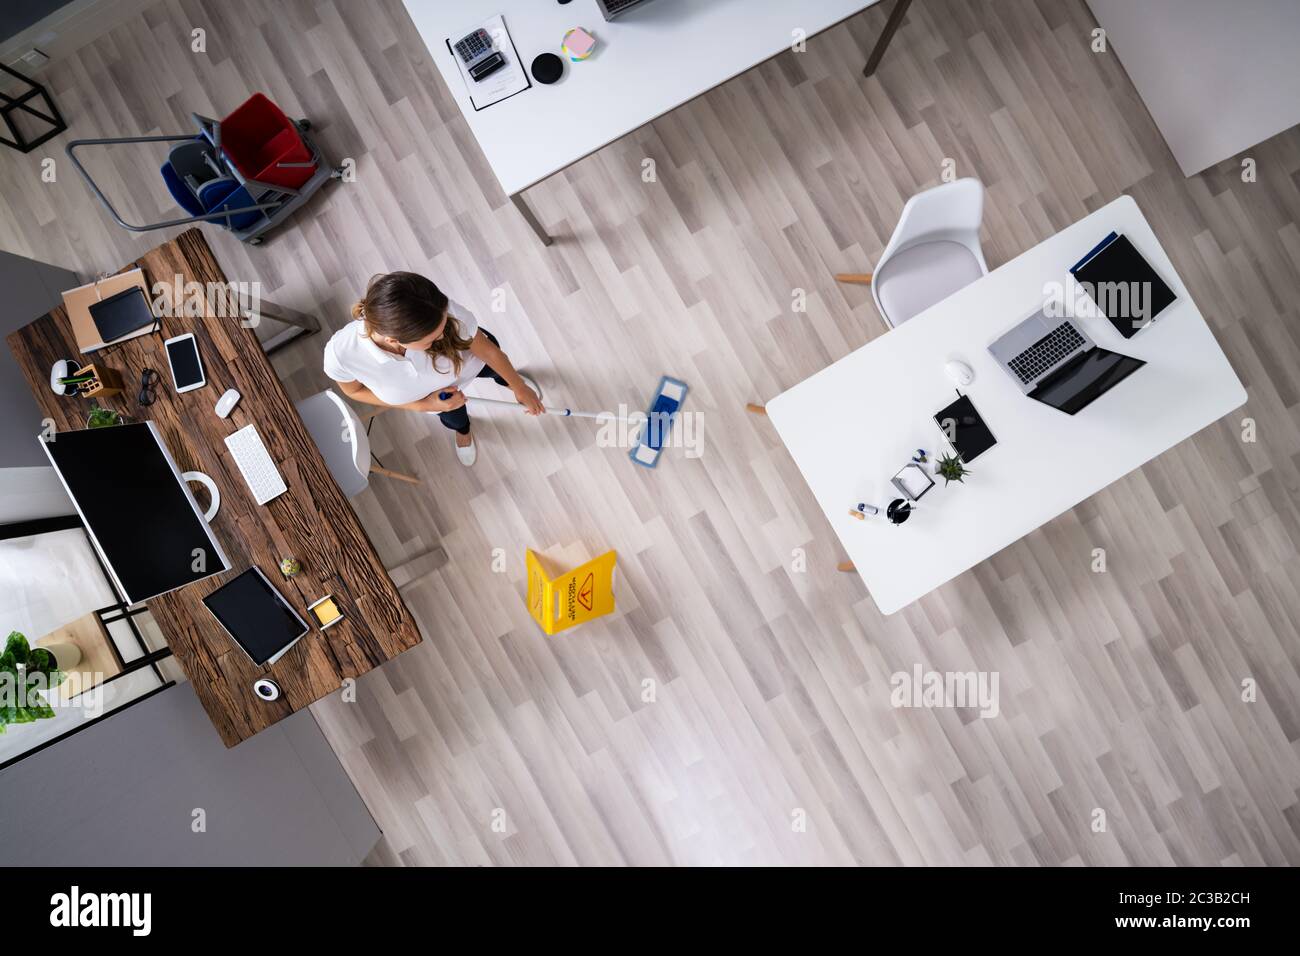 Full Length Of Female Janitor Mopping Floor In Office Stock Photo